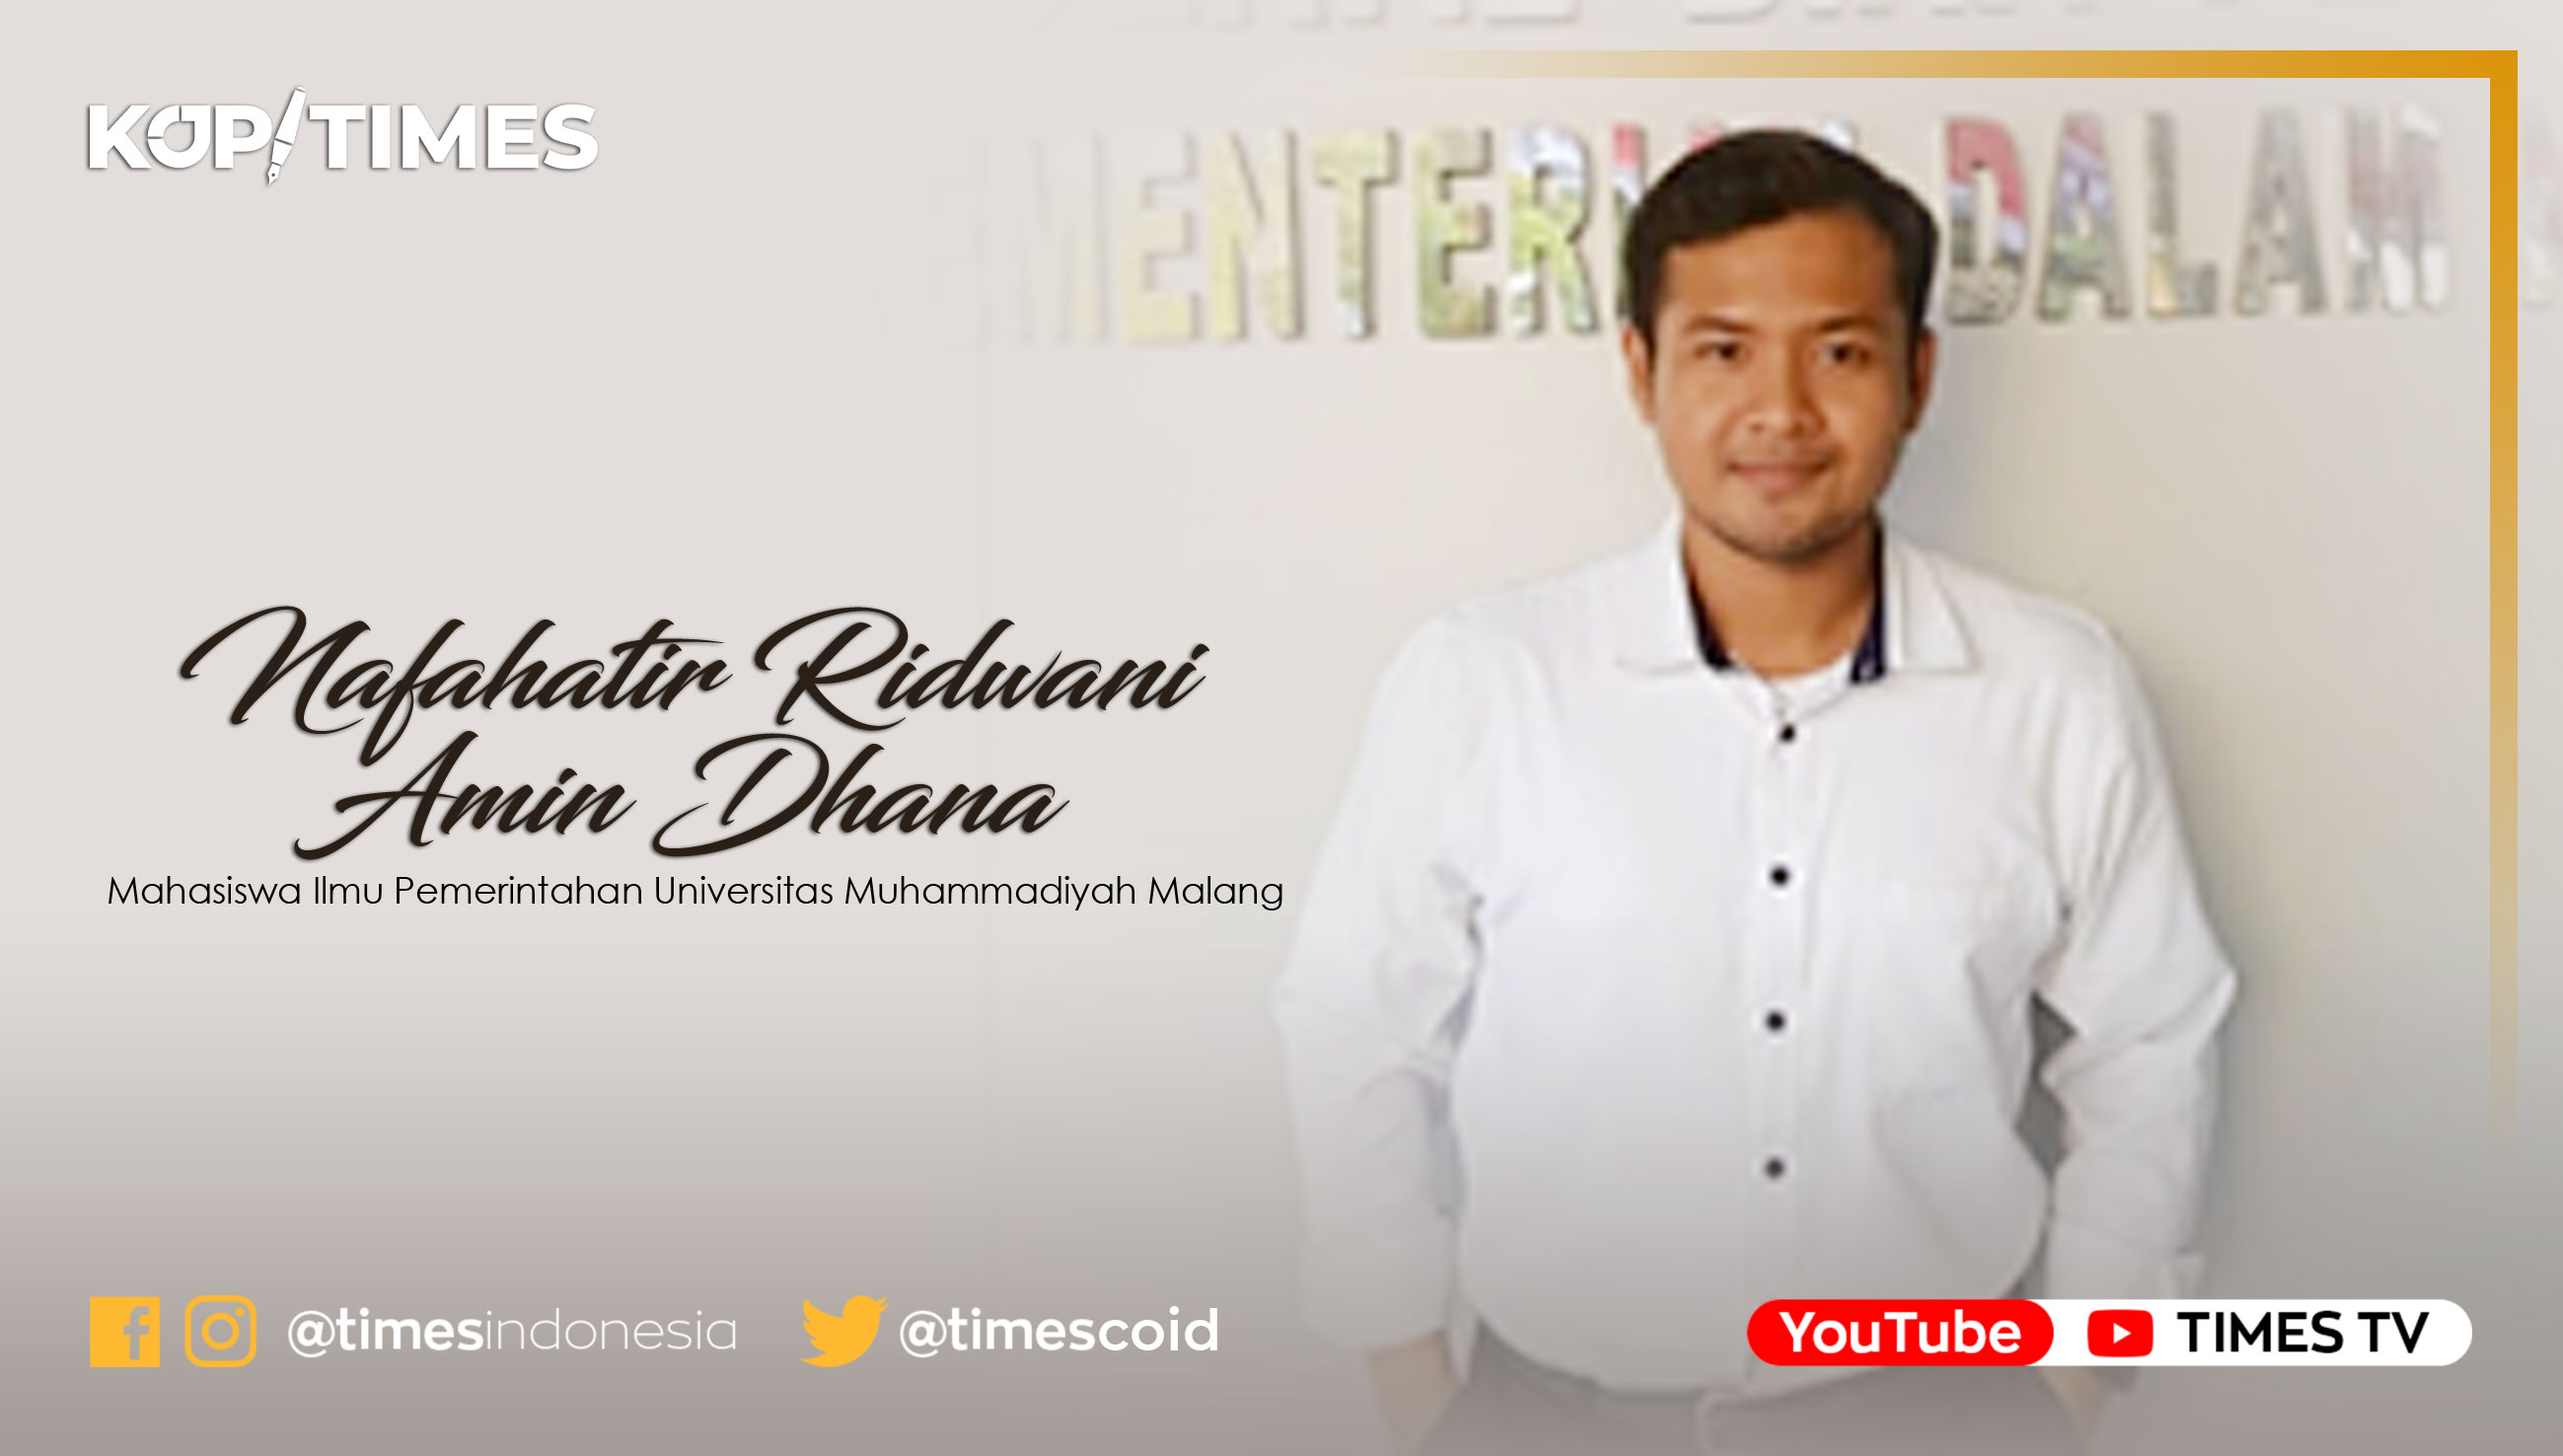 Nafahatir Ridwani Amin Dhana, Mahasiswa Ilmu Pemerintahan Universitas Muhammadiyah Malang.